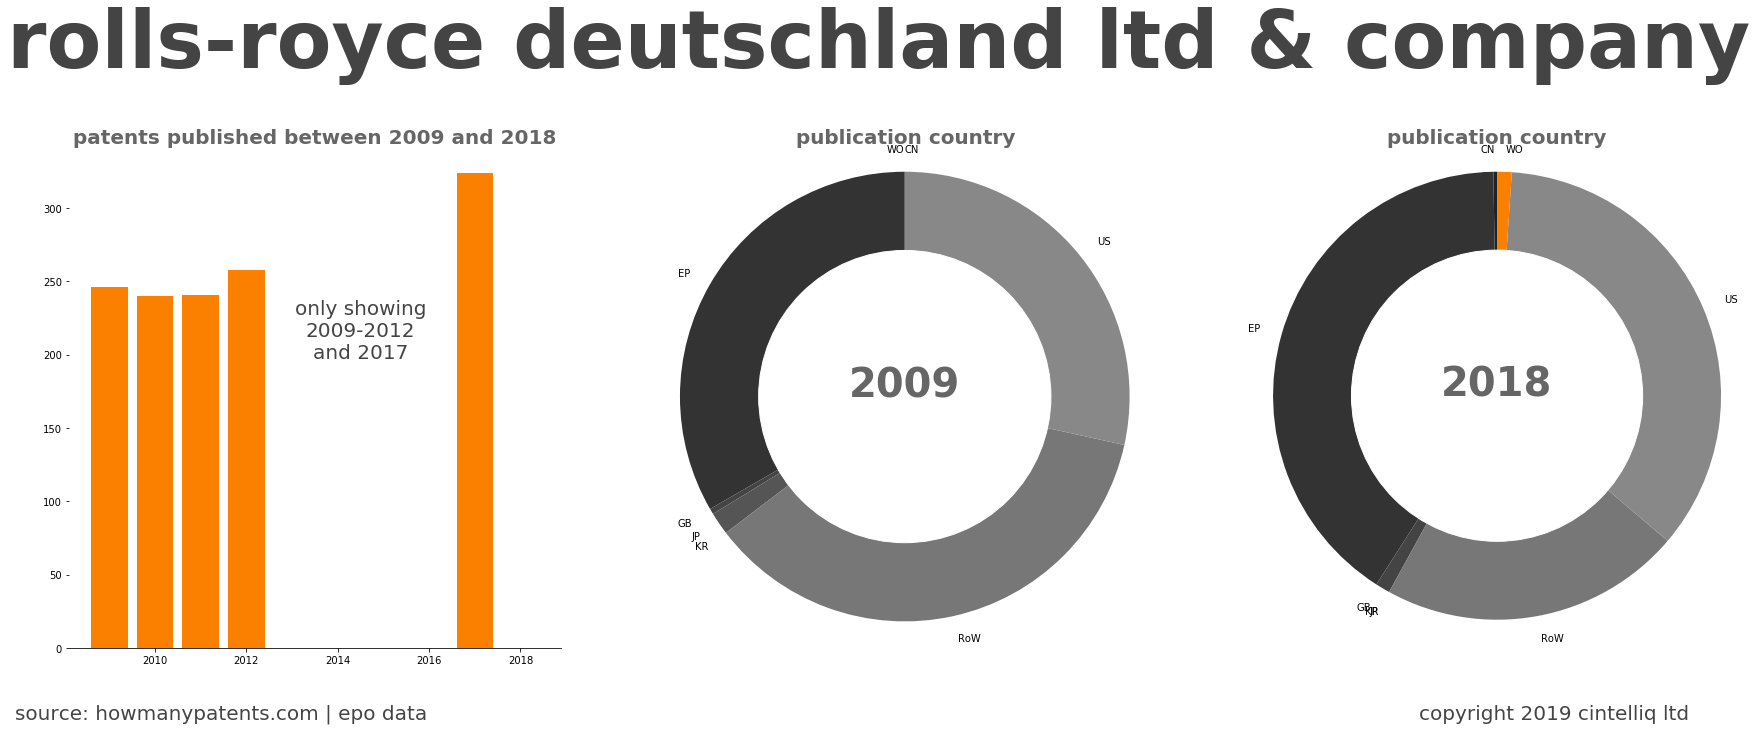 summary of patents for Rolls-Royce Deutschland Ltd & Company